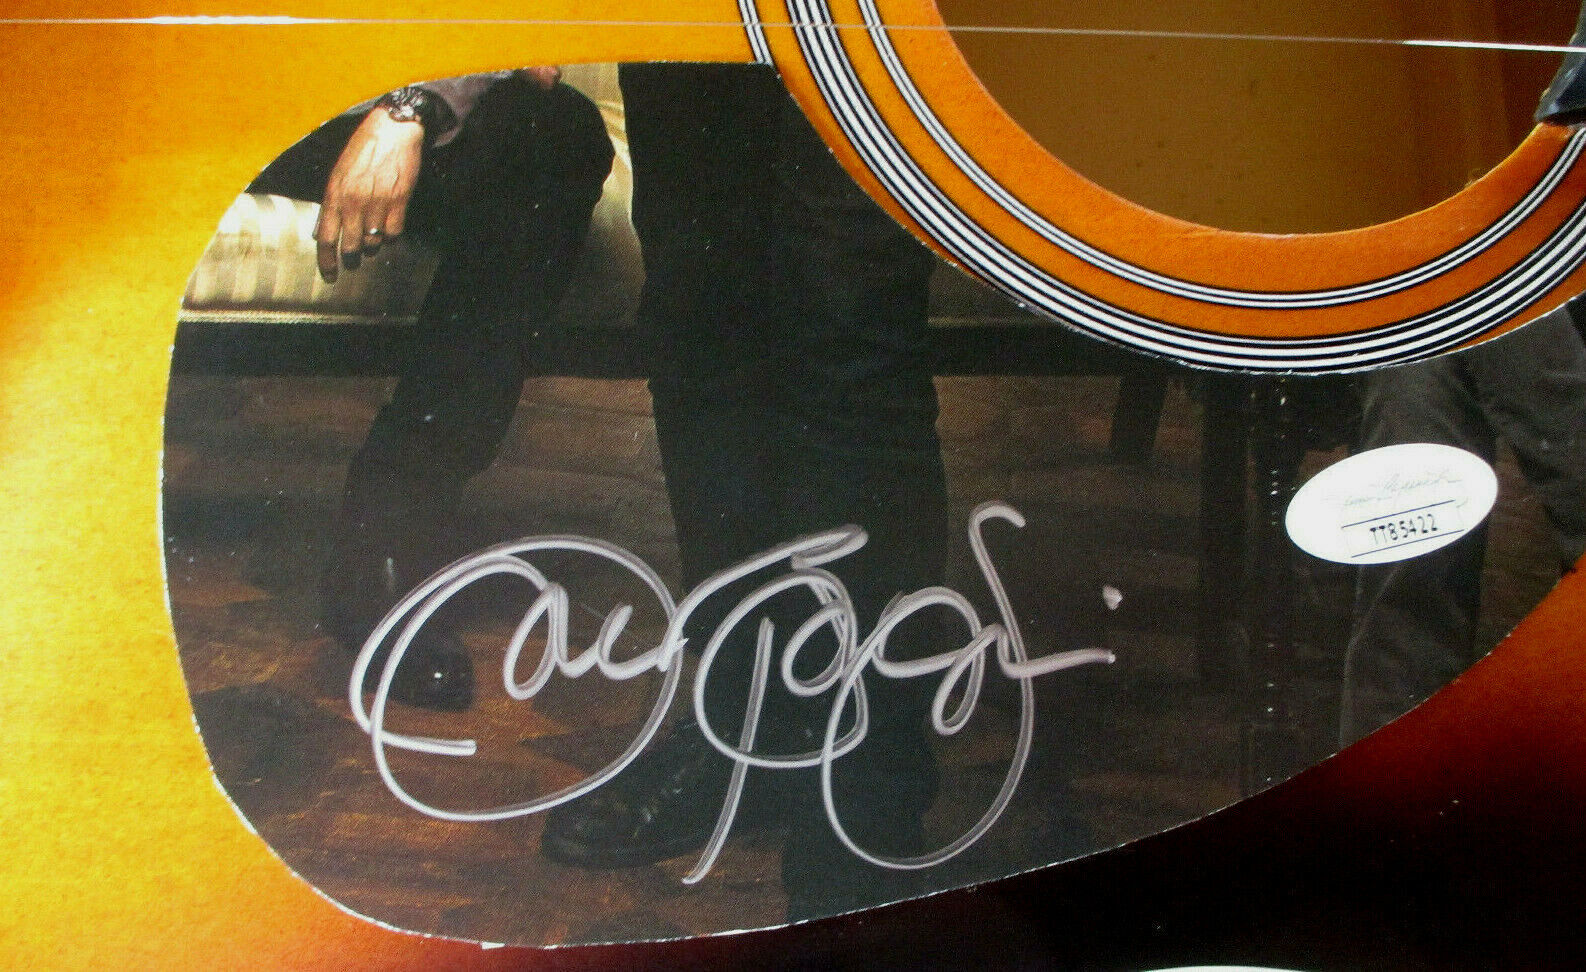 Jon Bon Jovi / Autographed 39" Three Color Sunburst Brown Acoustic Guitar / JSA